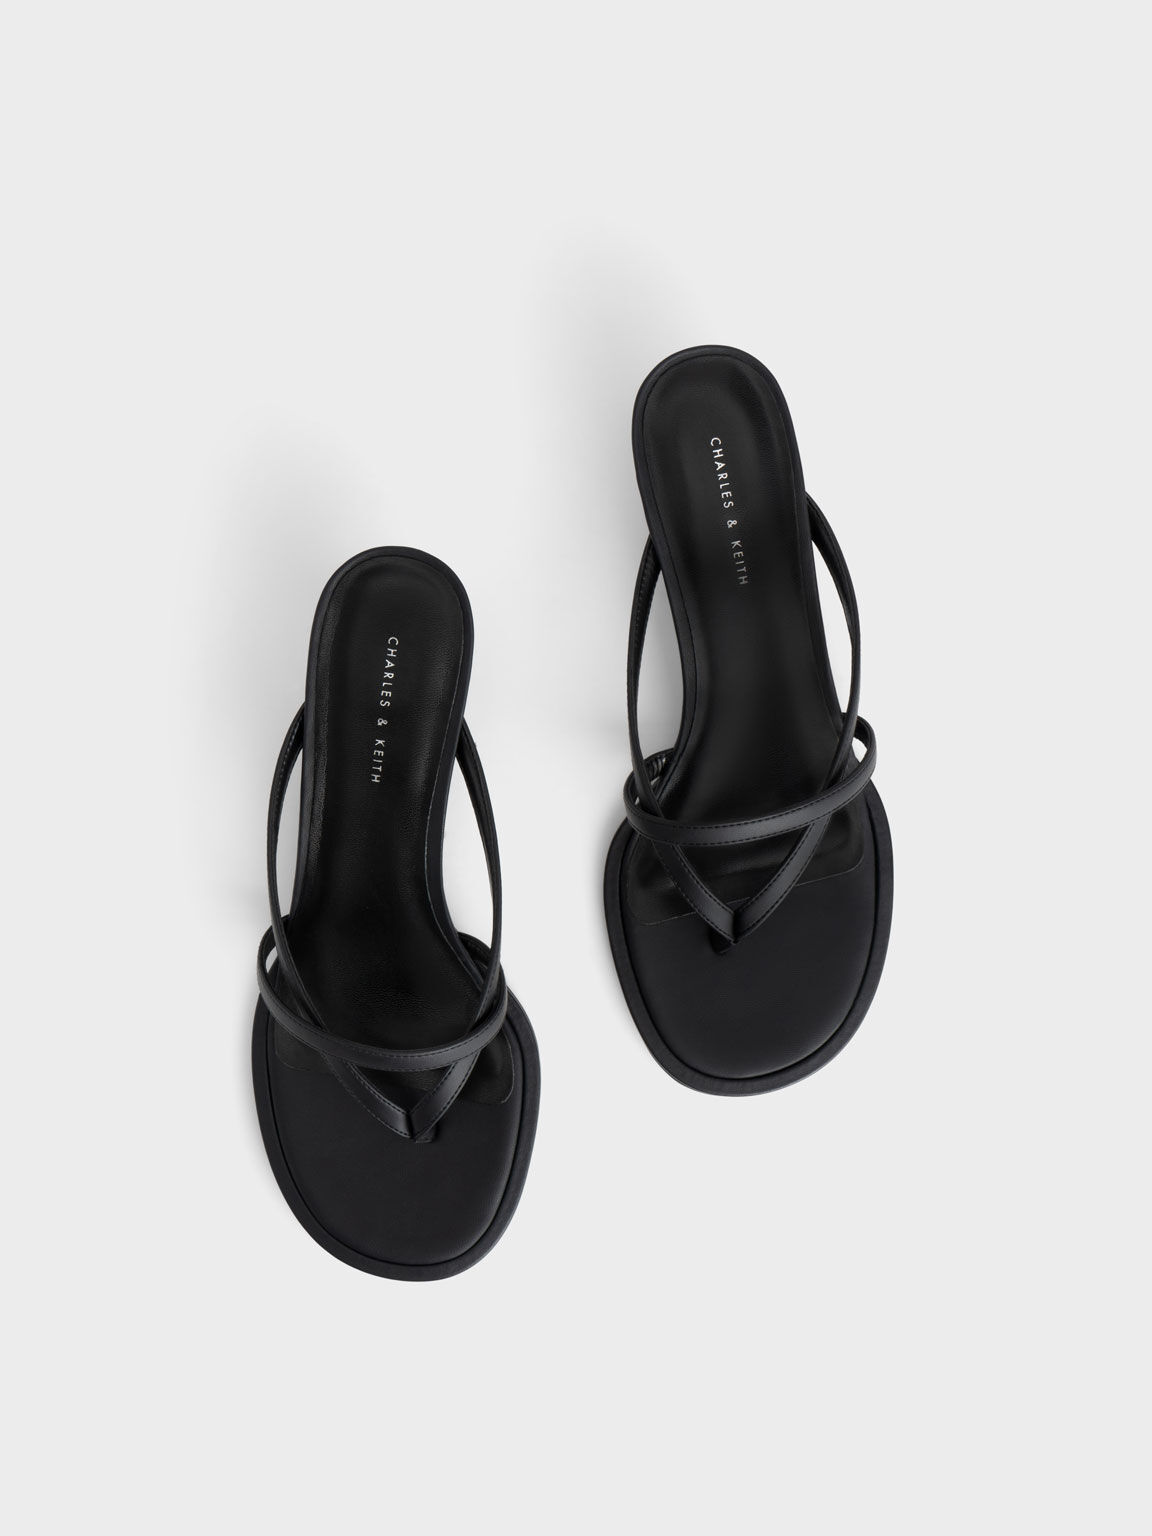 Sandal Thong Spool Heel, Black, hi-res